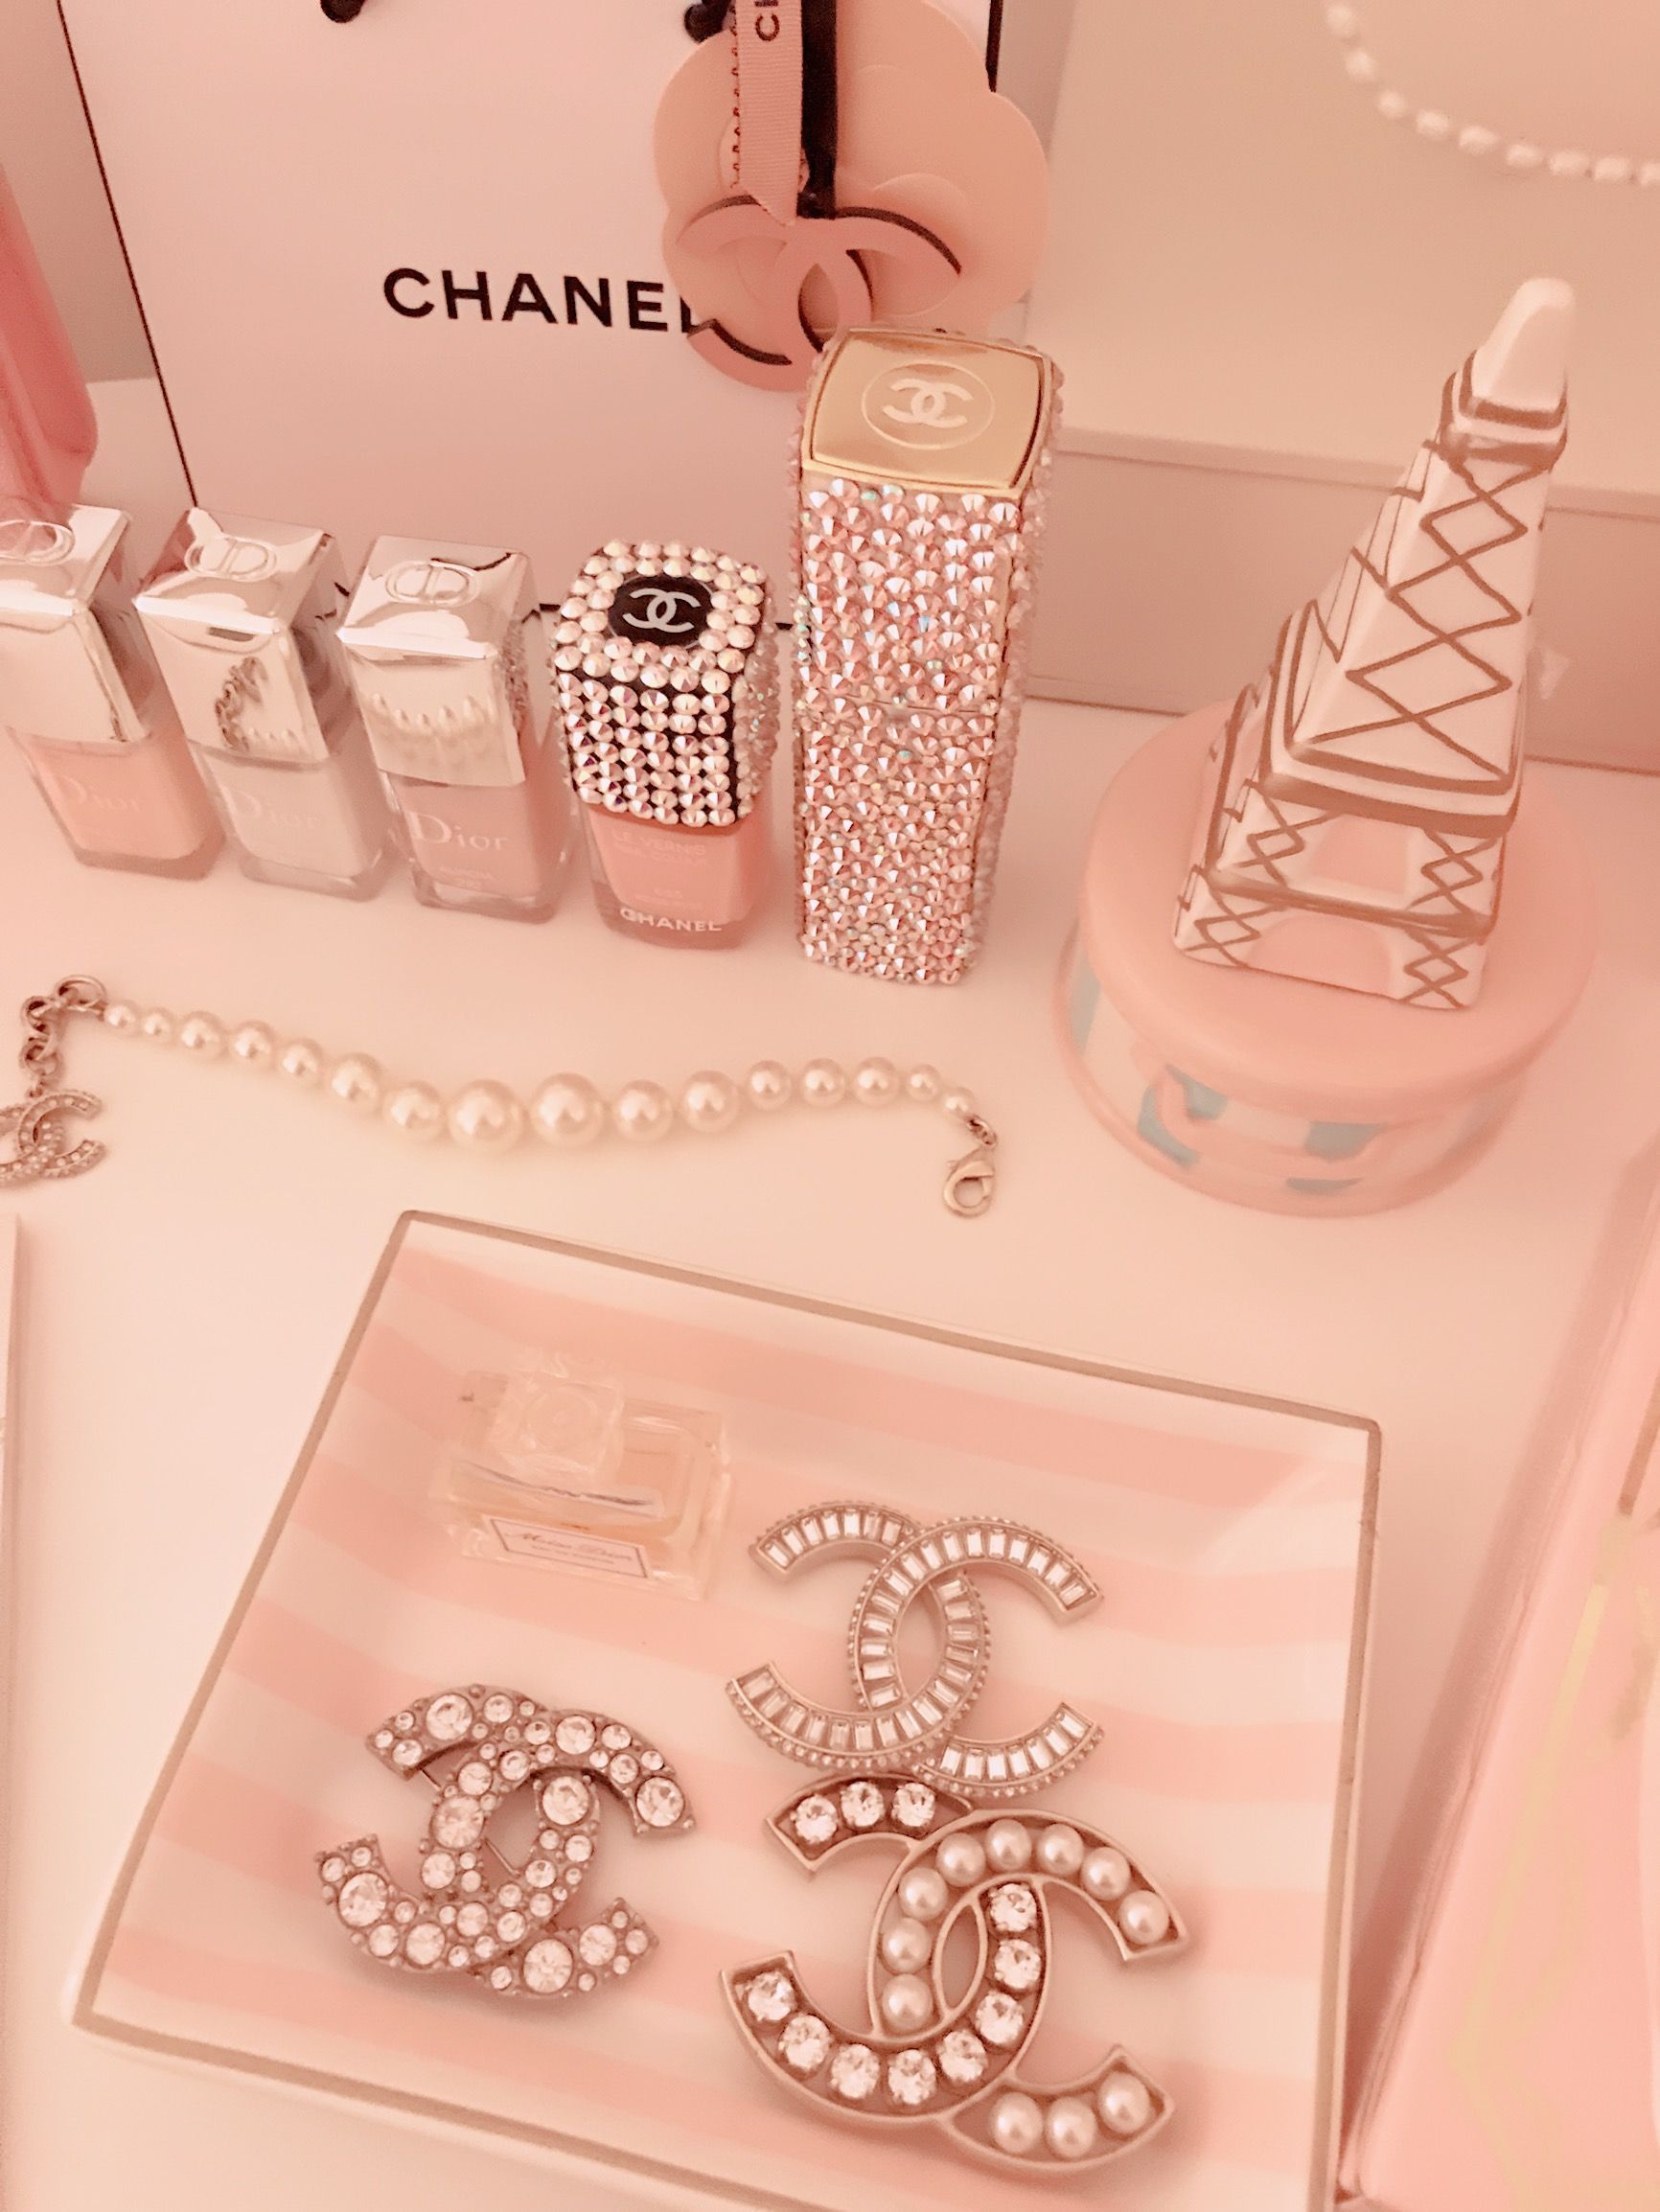 Chanel sweets tumblr